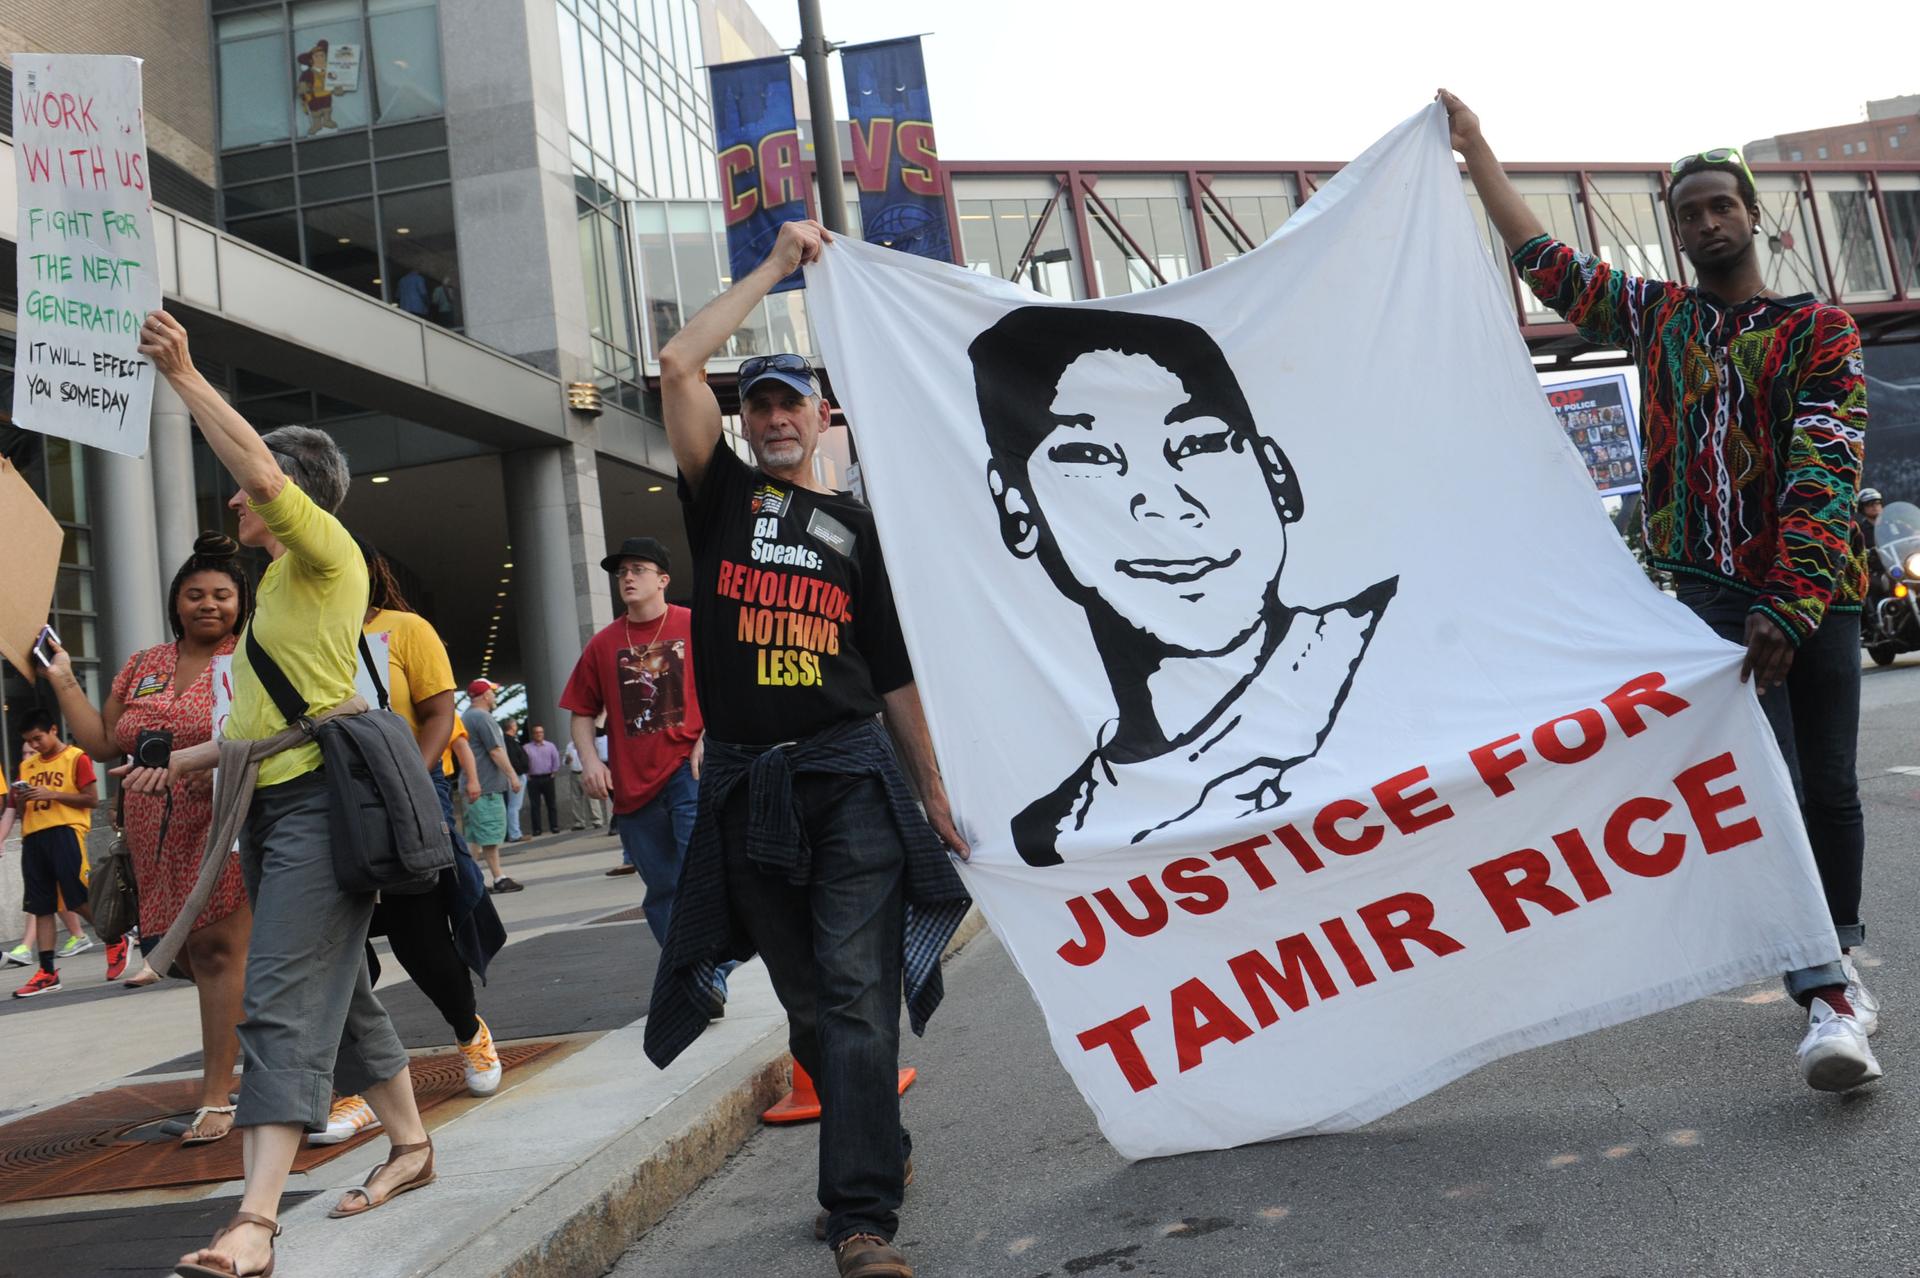 Tamir Rice protests